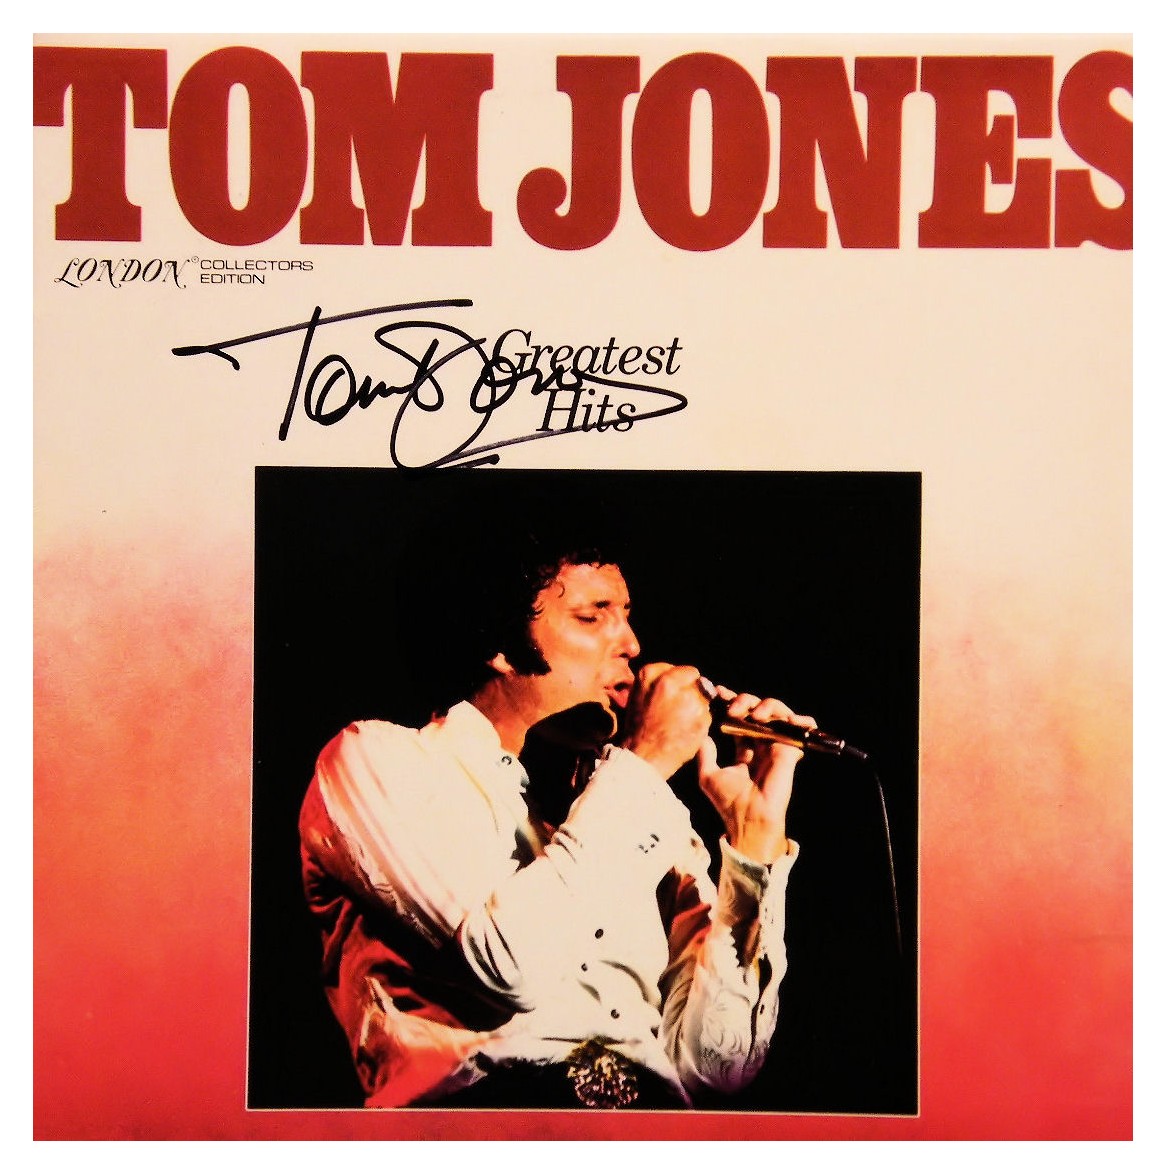 Tom Jones Greatest Hits Rock Star Gallery Signed Albumsrock Star Gallery